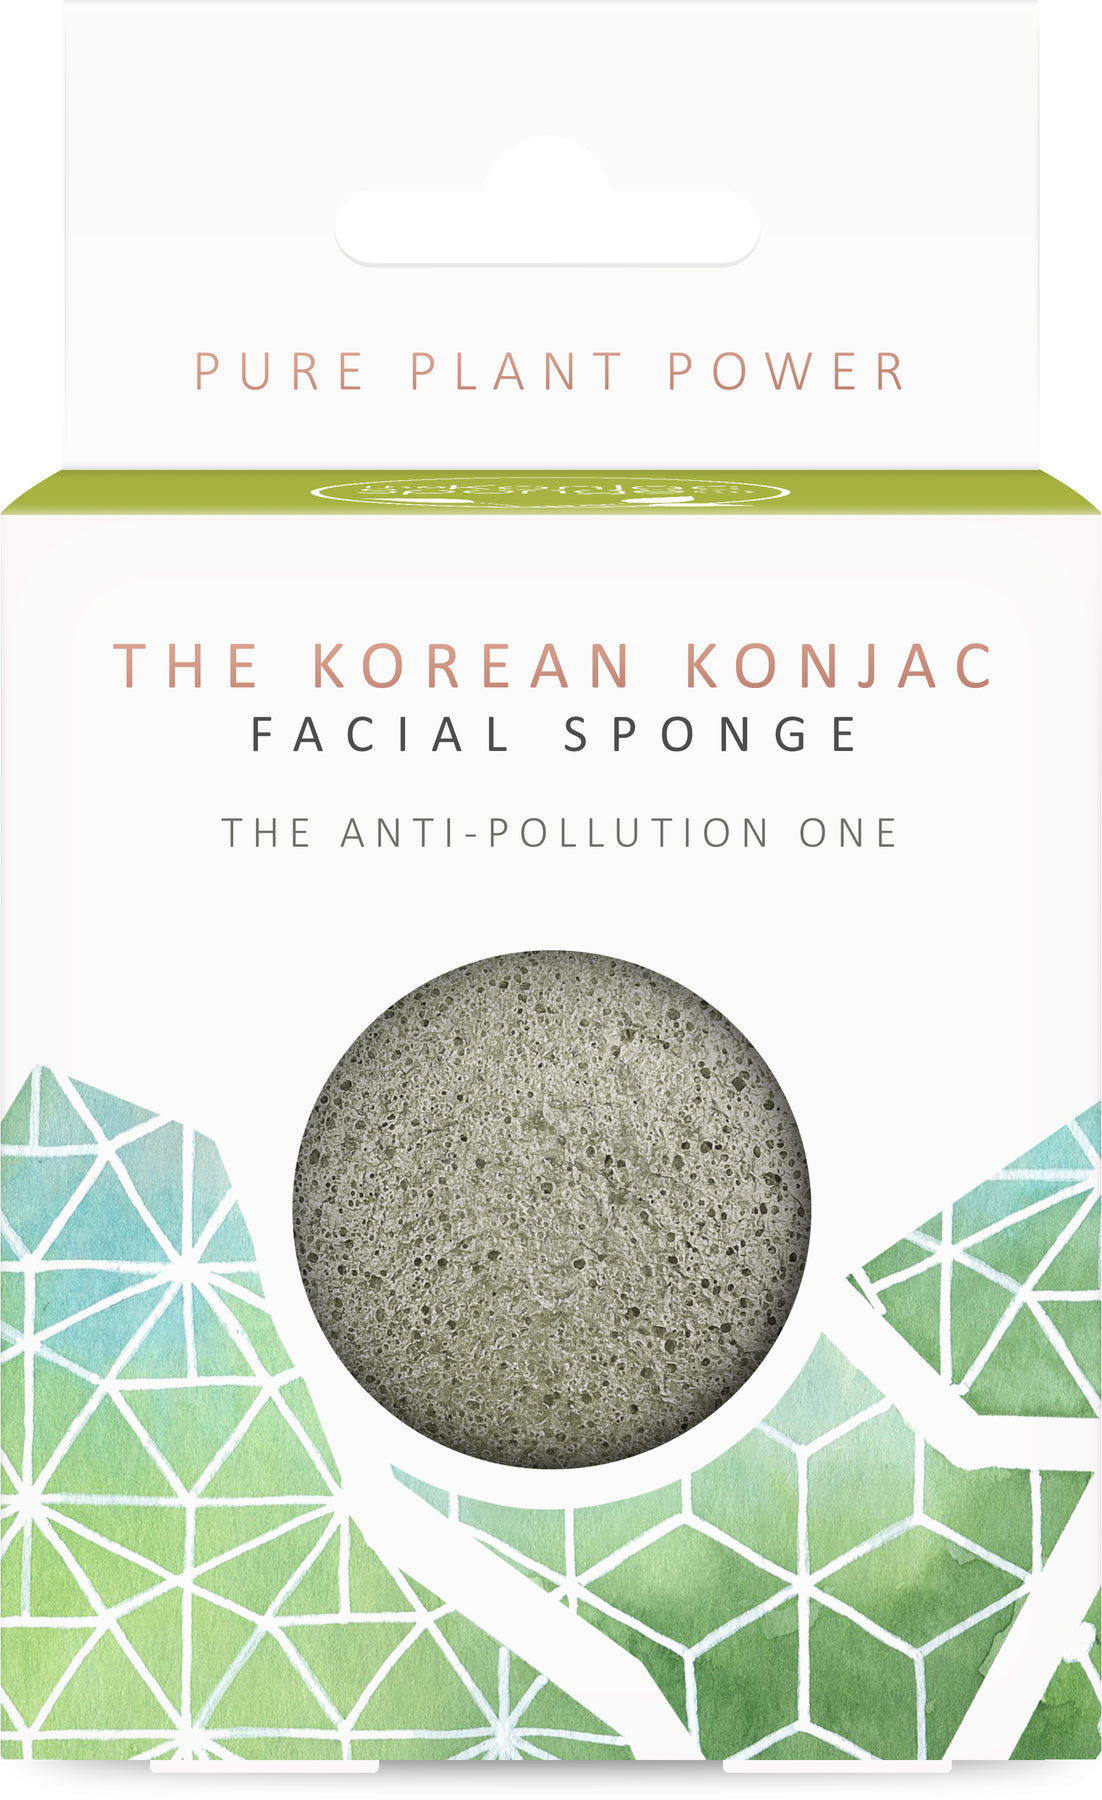 Konjac Facial Sponge THE ELEMENT EARTH - the anti-pollution sponge